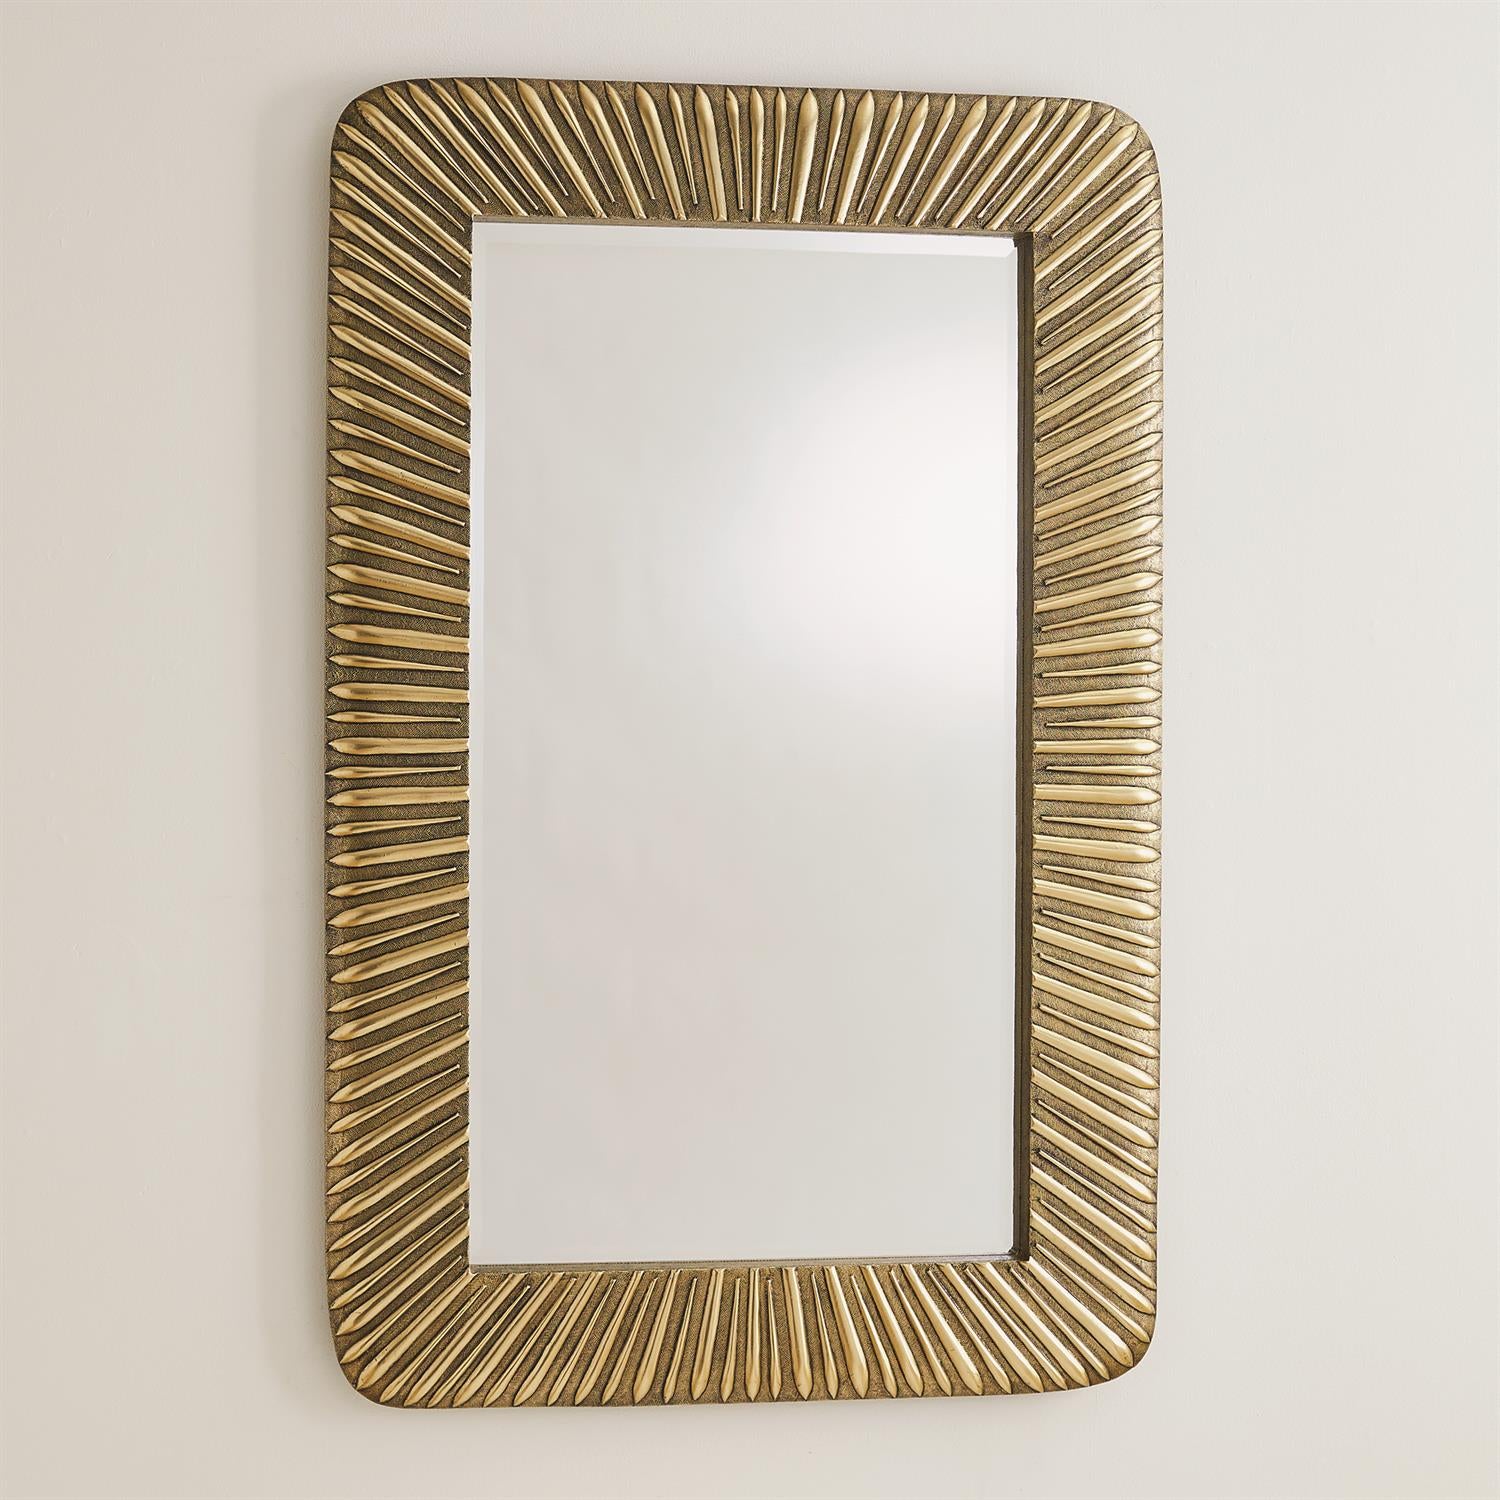 Valencia Mirror - Antique Brass - Grats Decor Interior Design & Build Inc.